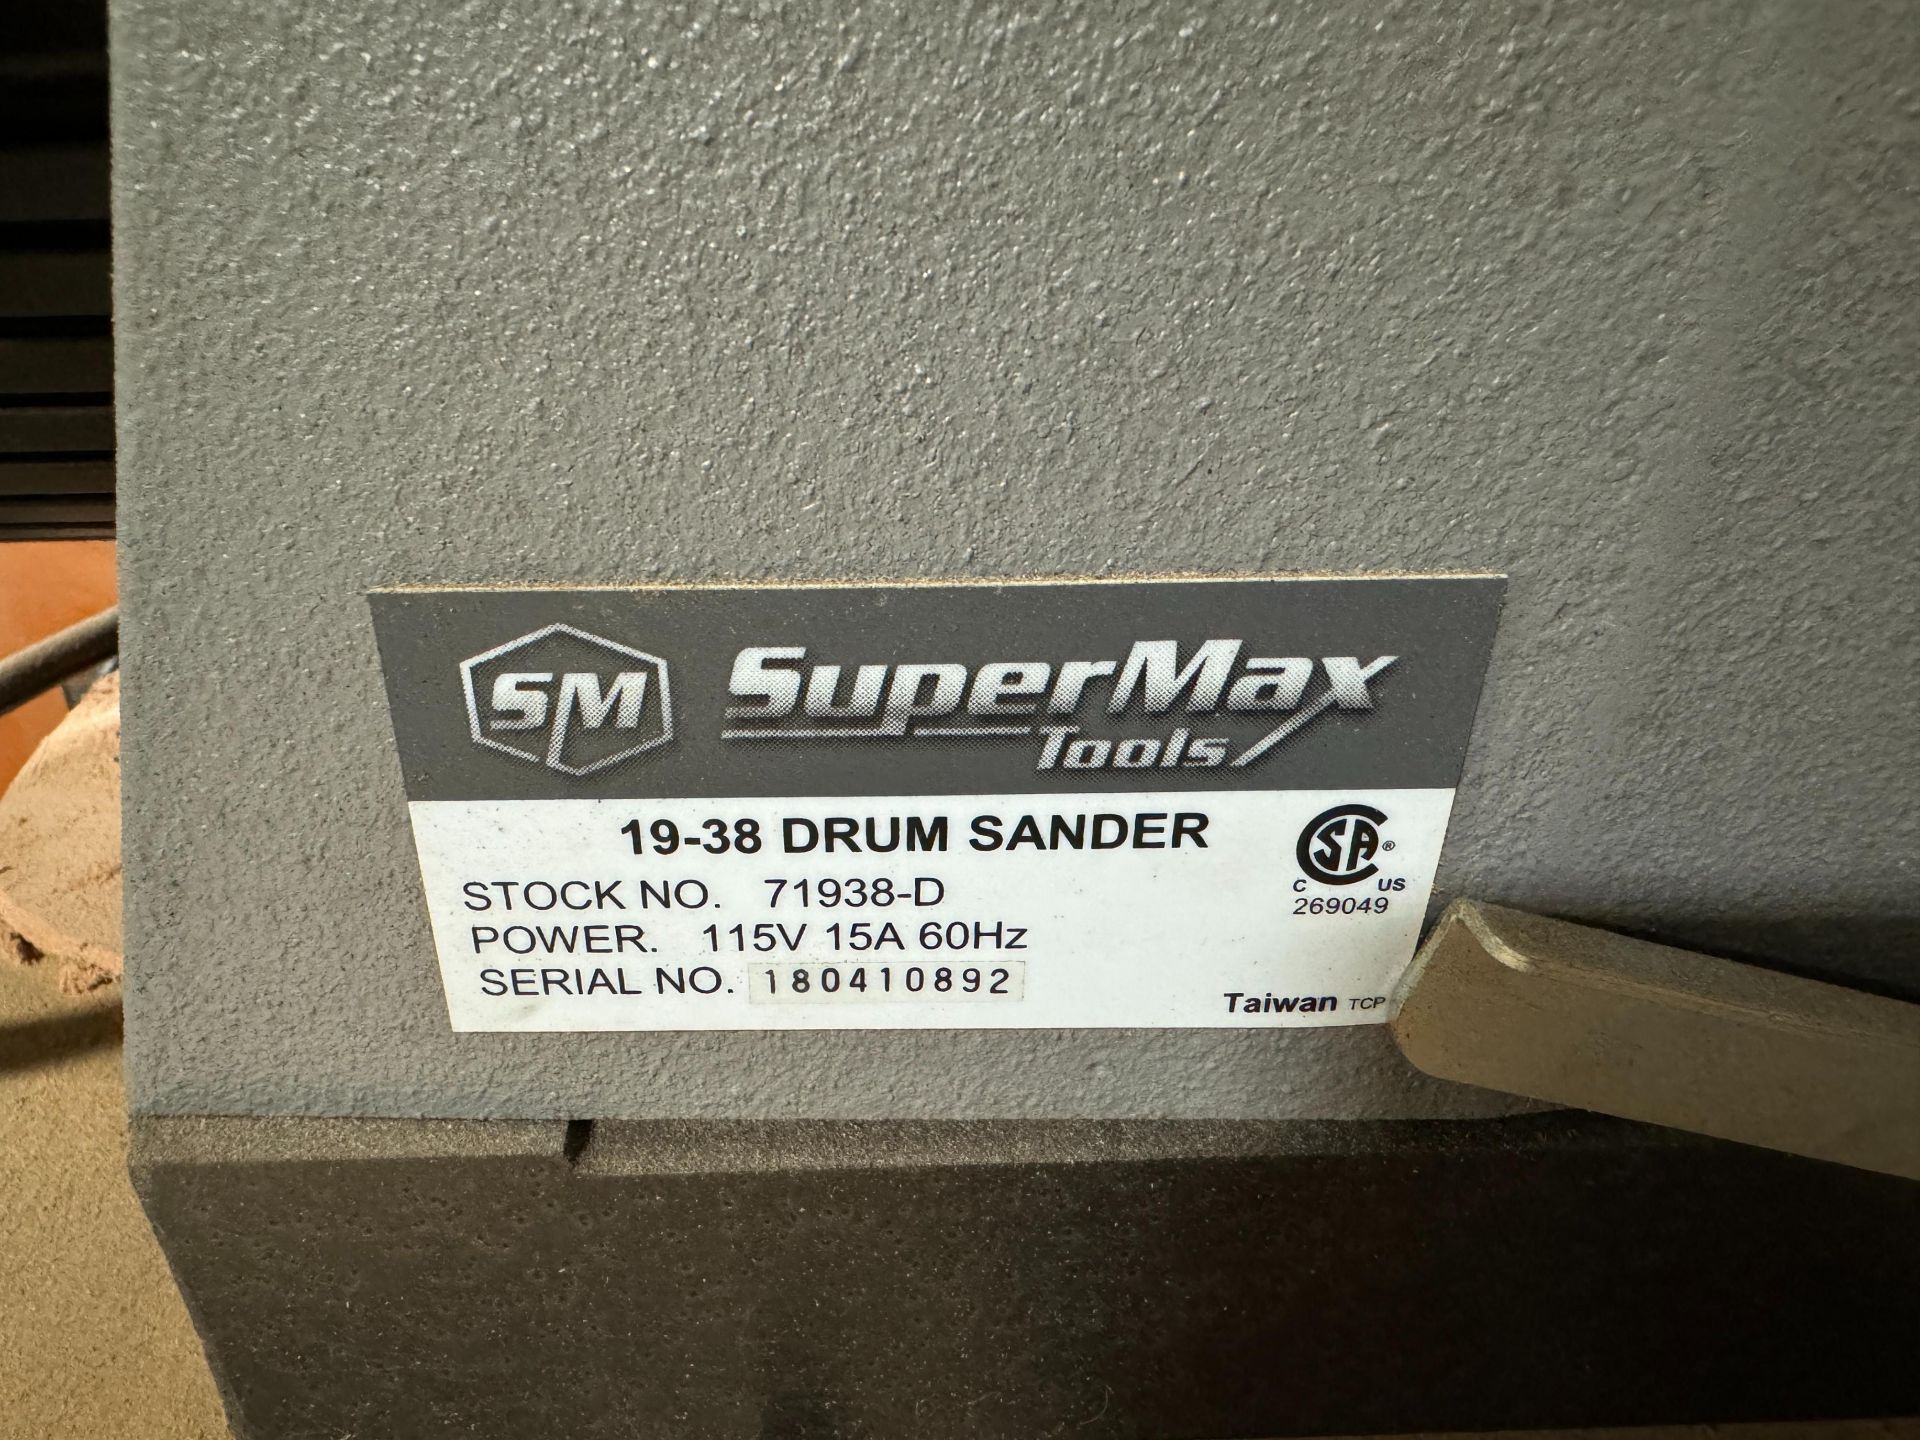 SUPERMAX 19-38 DRUM SANDER, 1-3/4 HP, 115V, S/N 180410892 - Image 8 of 9